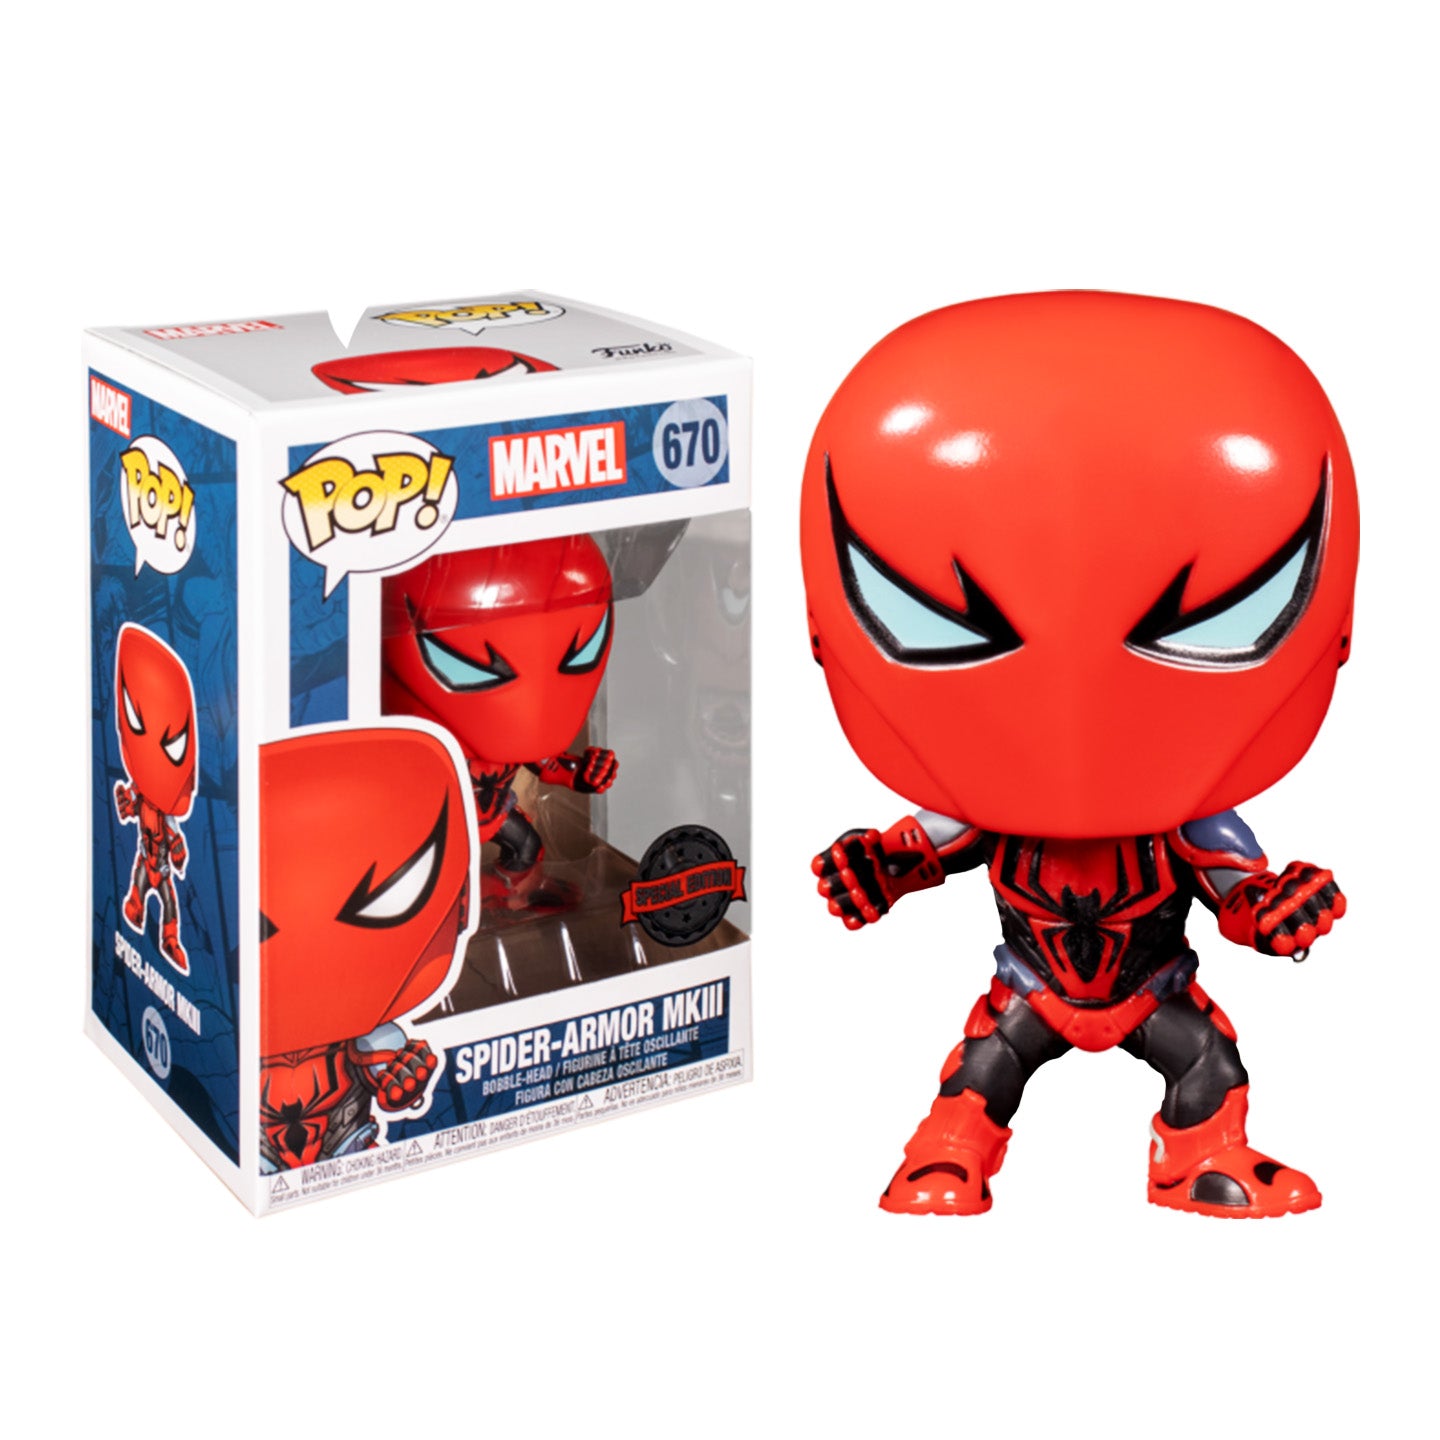 Marvel Funko Pop! Spider-Armor MKIII 